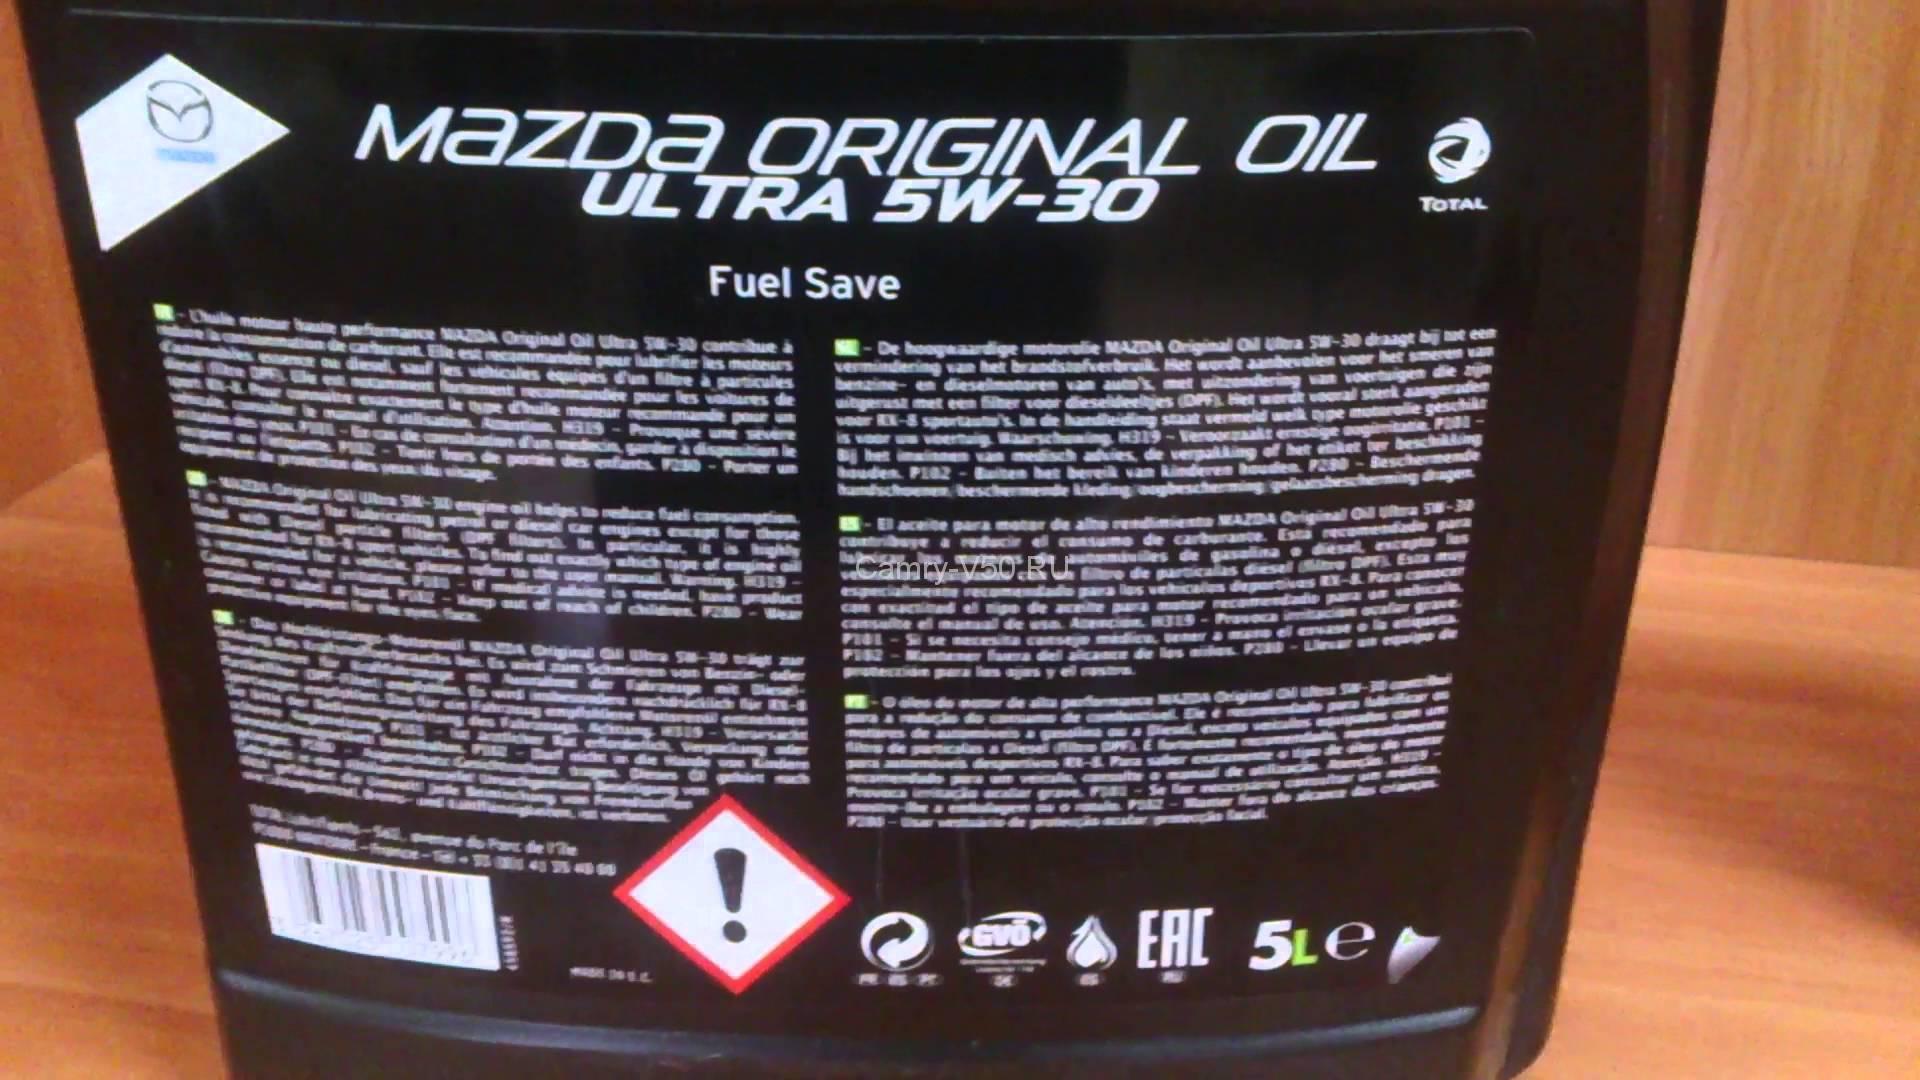 Мазда допуски моторного масла. Мазда оригинал Ойл ультра 5w30. Mazda Original Oil Ultra 5w-30. Масло Мазда 5w30 оригинал. Mazda Original Oil Ultra 5w-30 1 л.